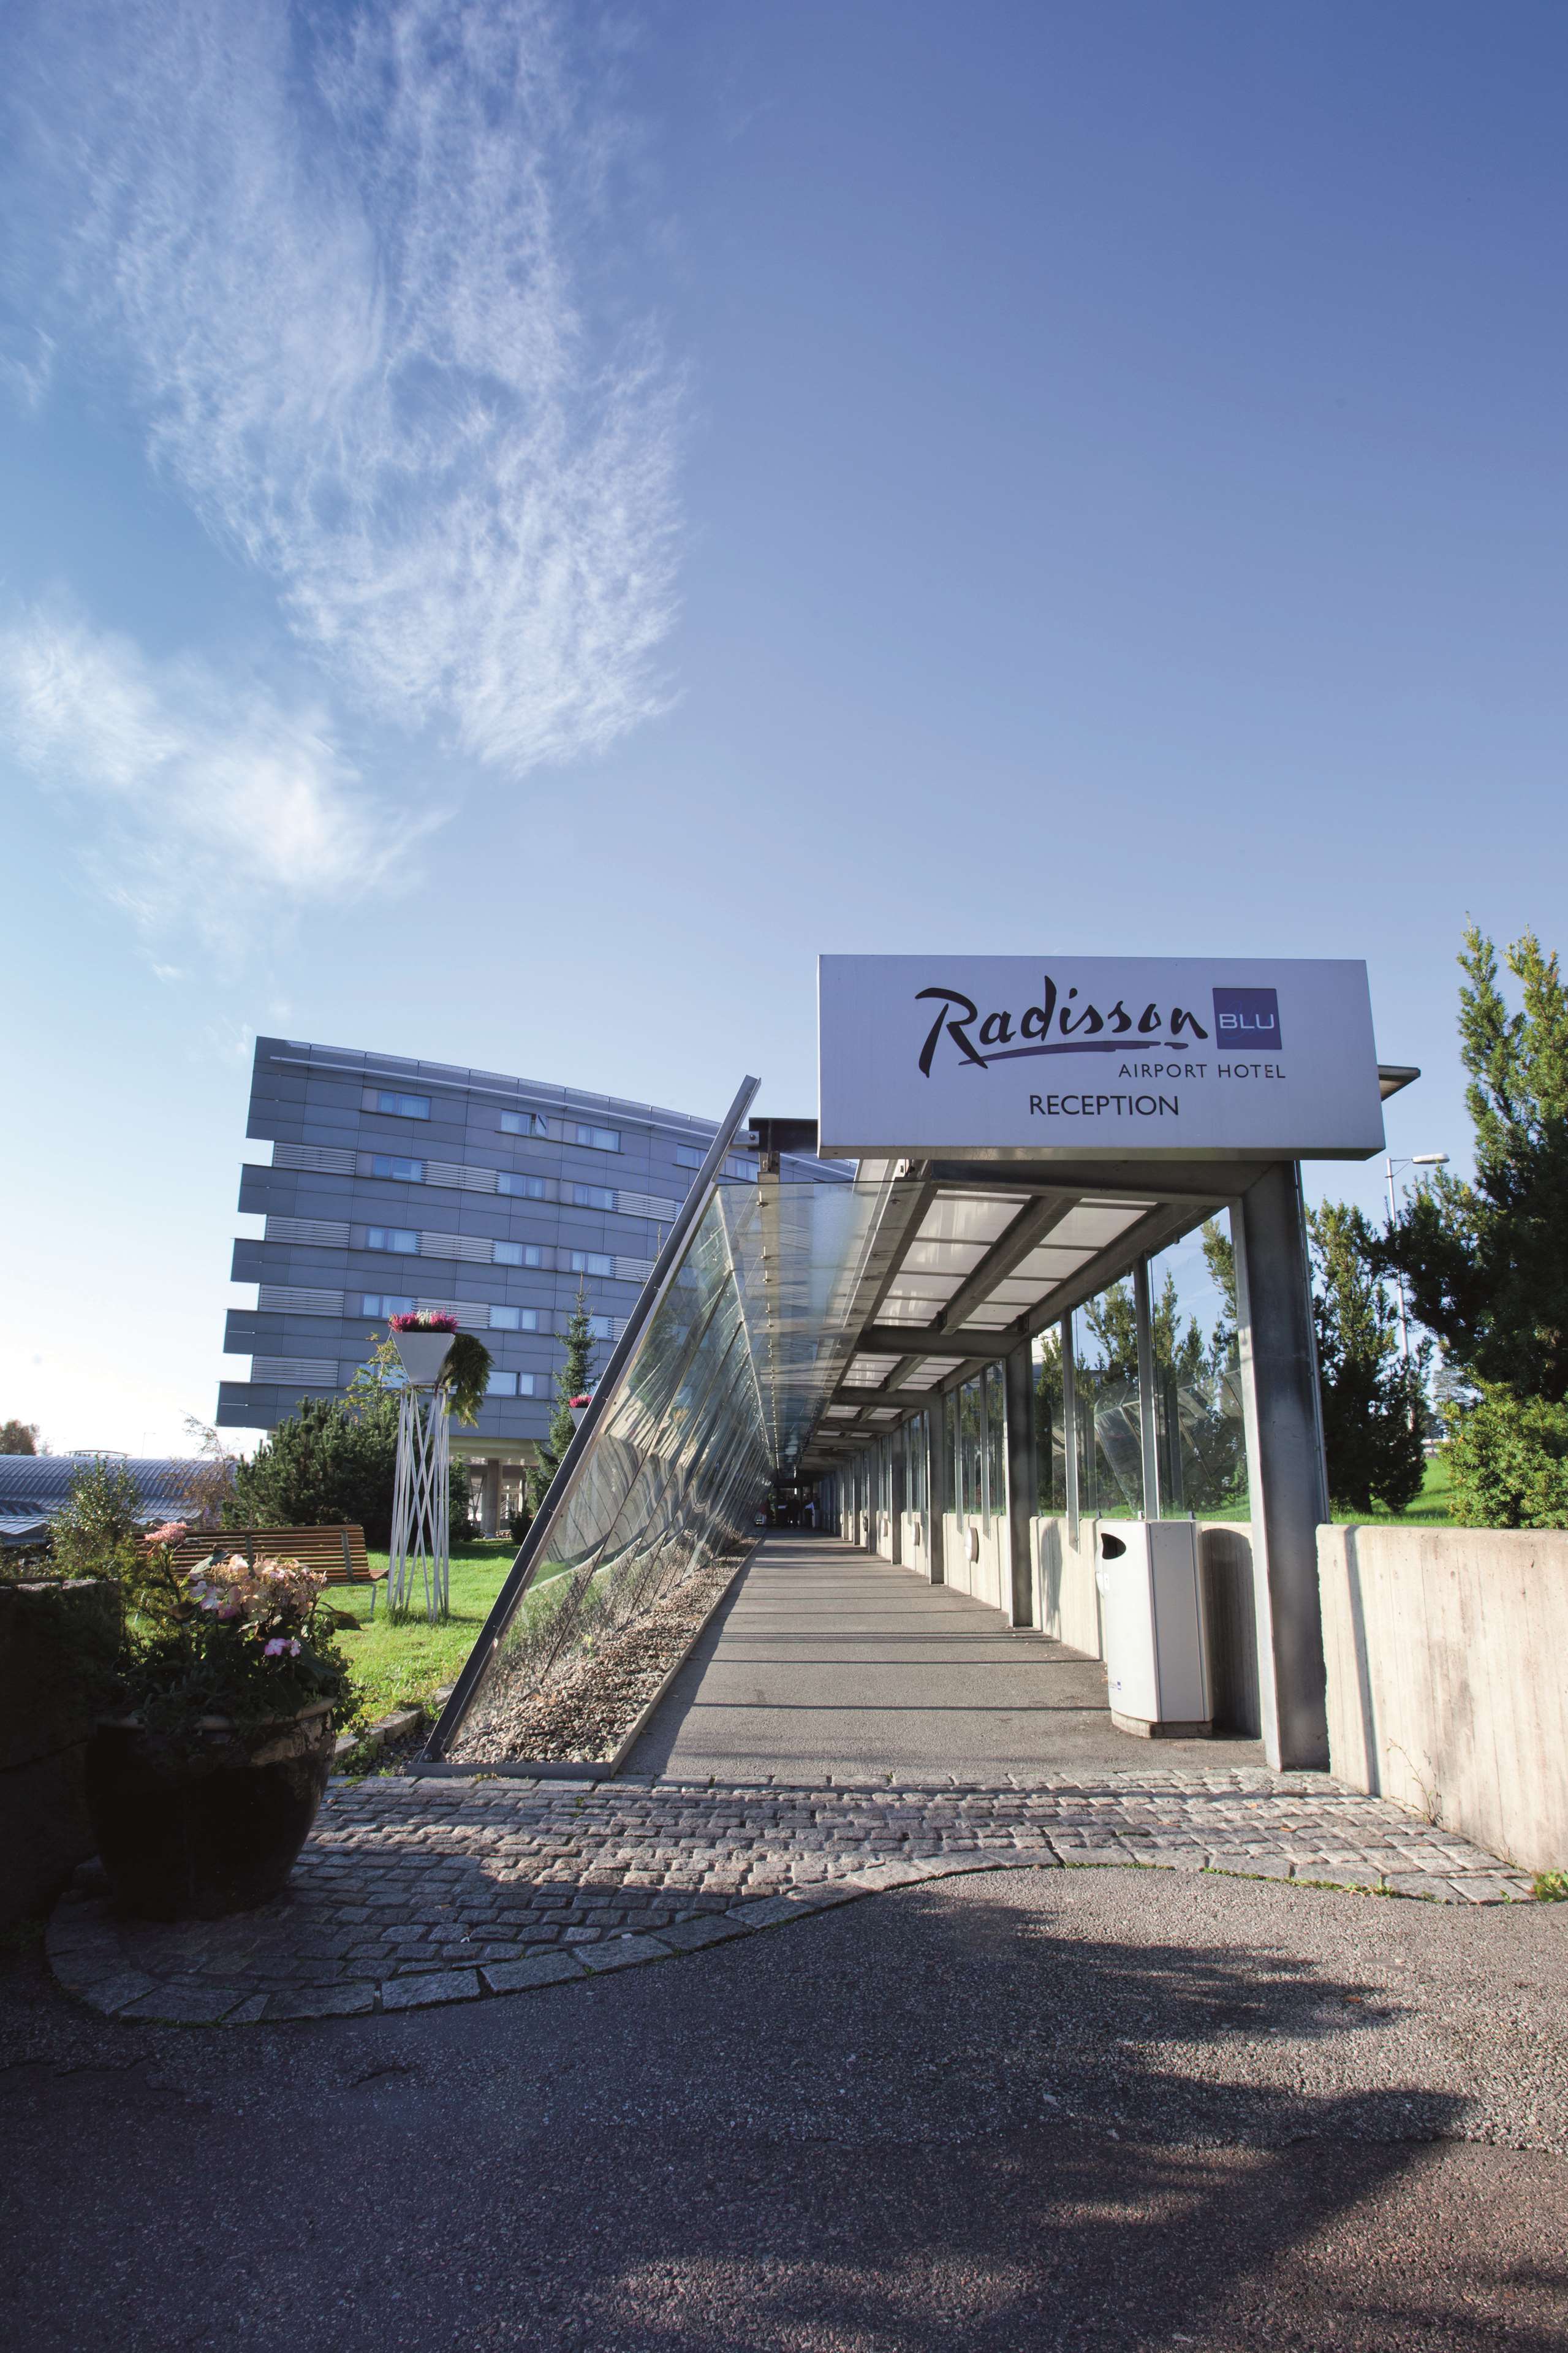 Radisson Blu Airport Hotel, Oslo Gardermoen Hotell, Ullensaker - 22